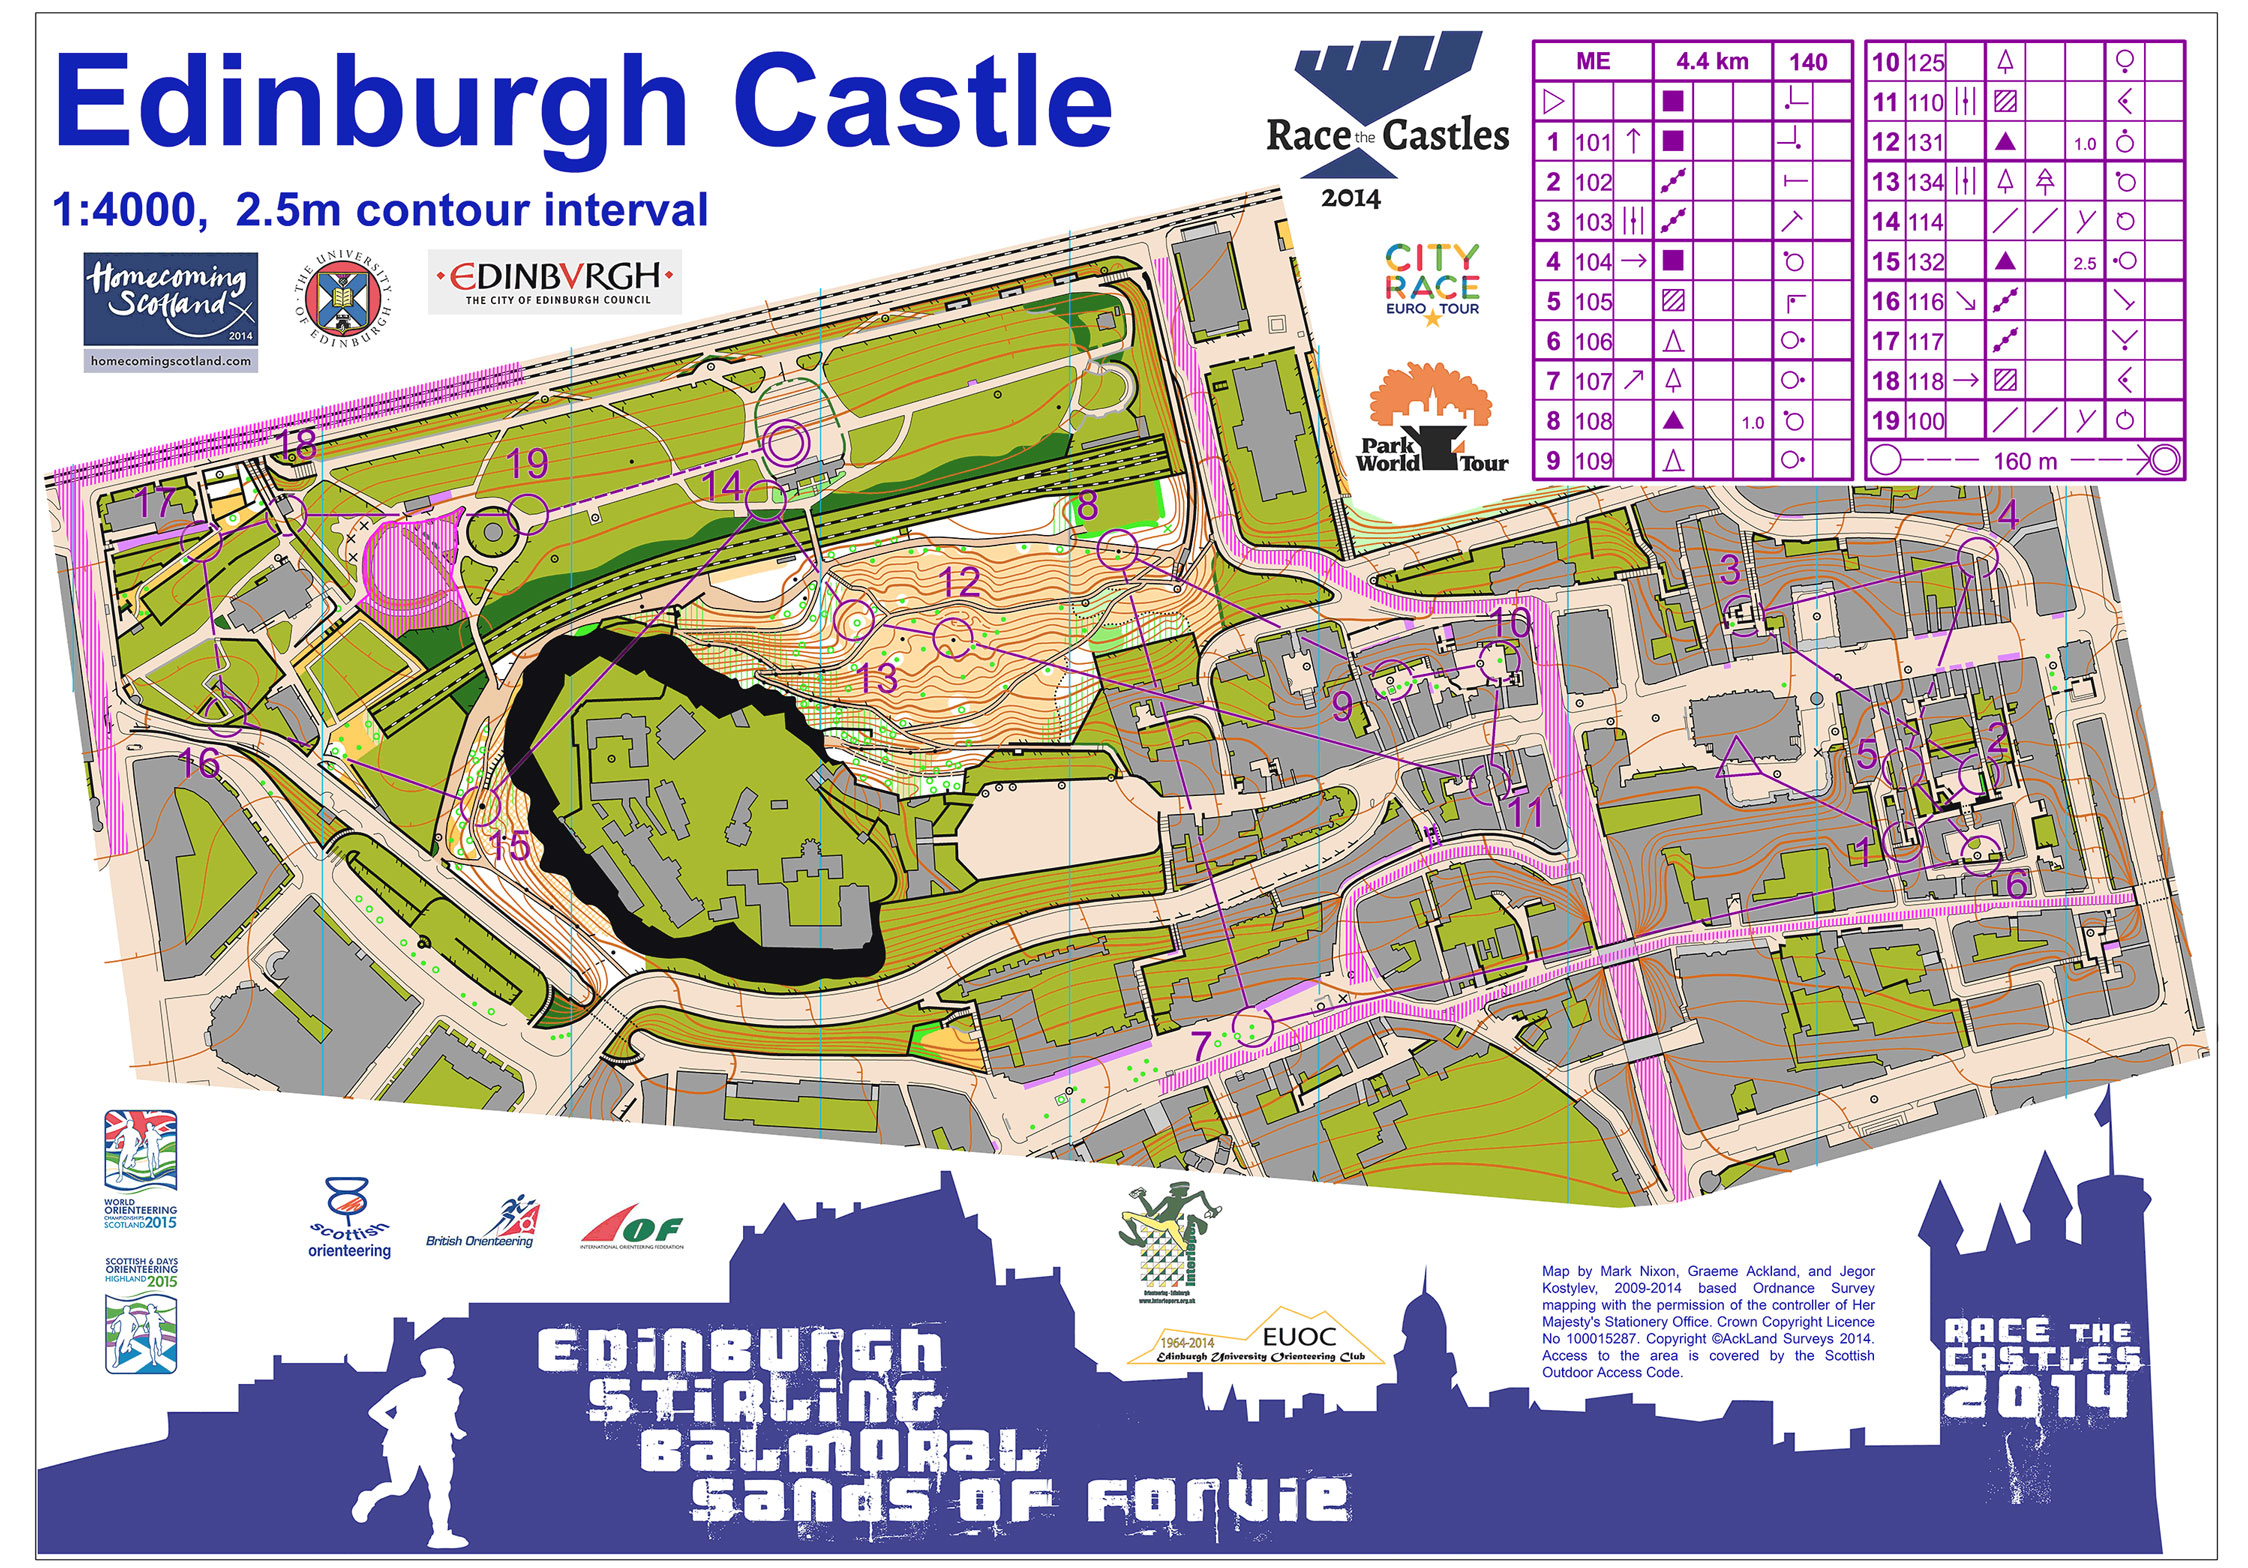 Race the Castles Edinburgh (2014-10-11)